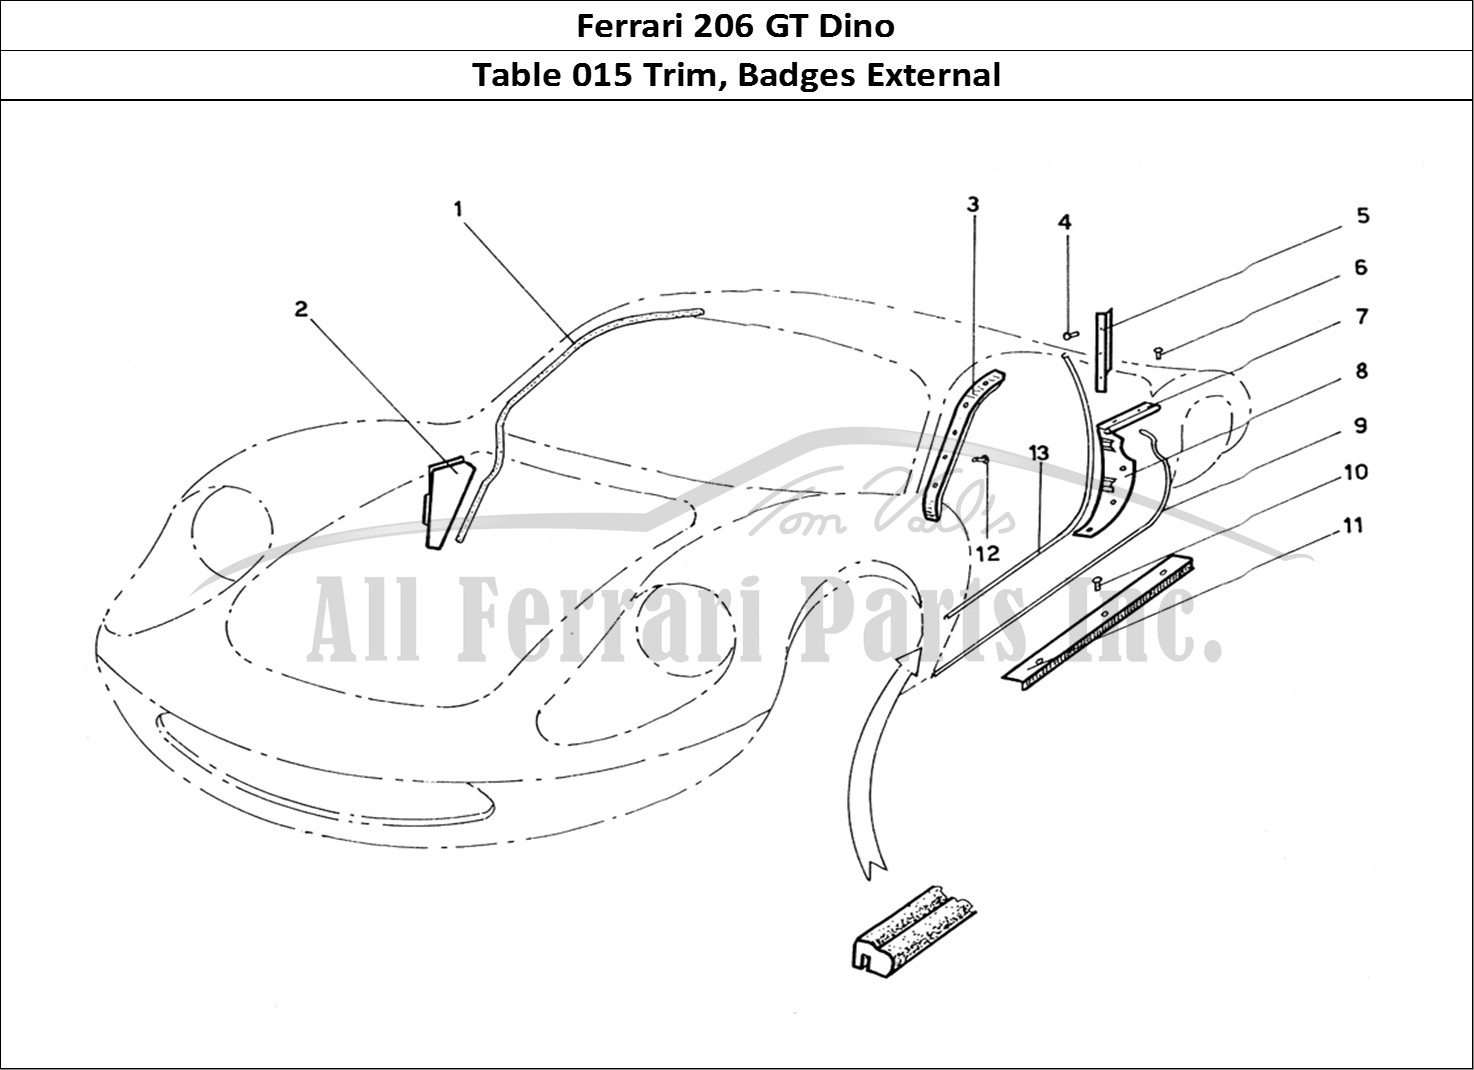 Ferrari Parts Ferrari 206 GT Dino (Coachwork) Page 015 Finishing Trim